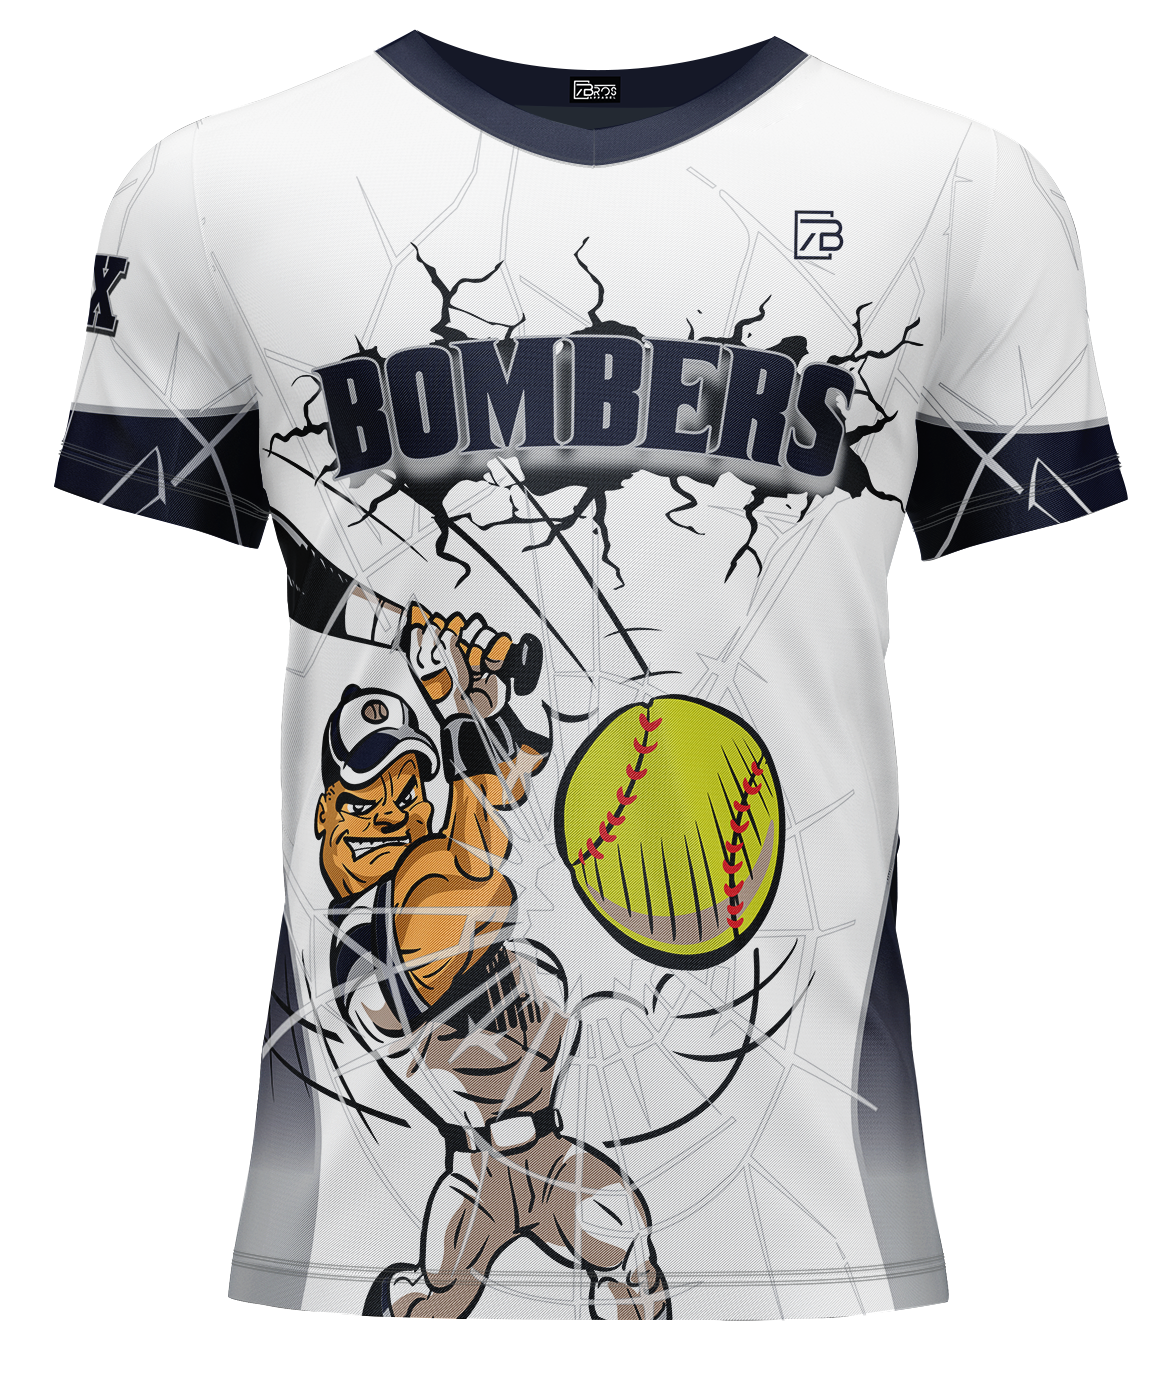 Custom Bombers Baseball/Softball Jersey